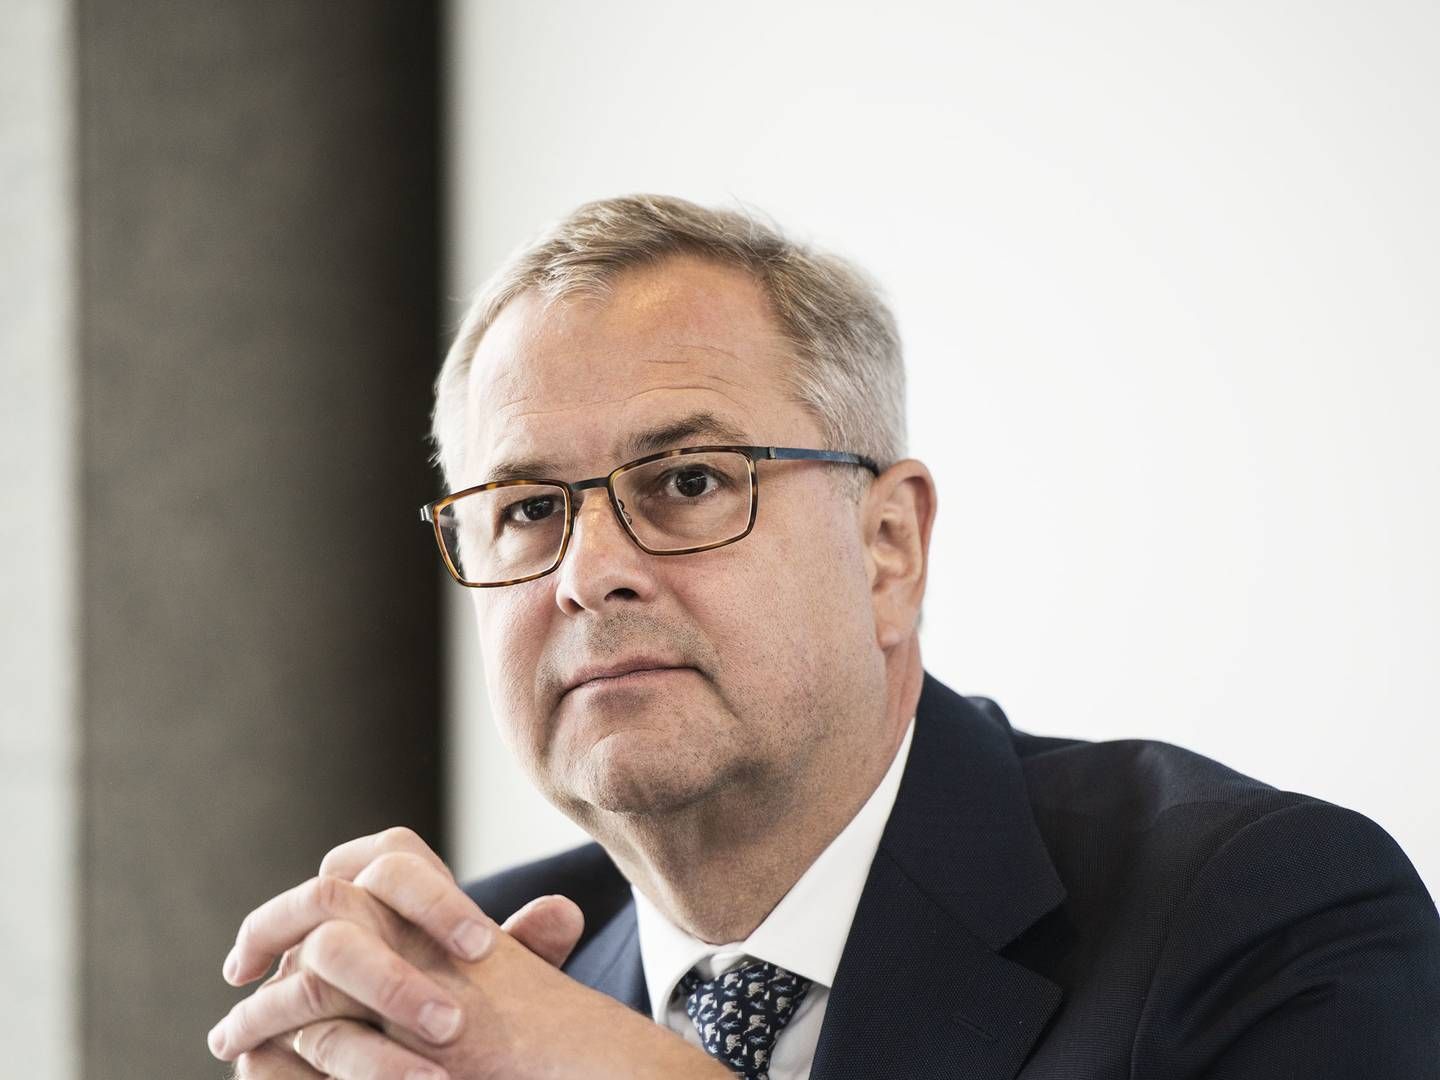 Maersk CEO Søren Skou has already met the financial targets in the logistics area, however, it remains to be tested in a normalized market, views Sydbank. | Photo: Casper Holmenlund Christensen/Jyllands-Posten/Ritzau Scanpix